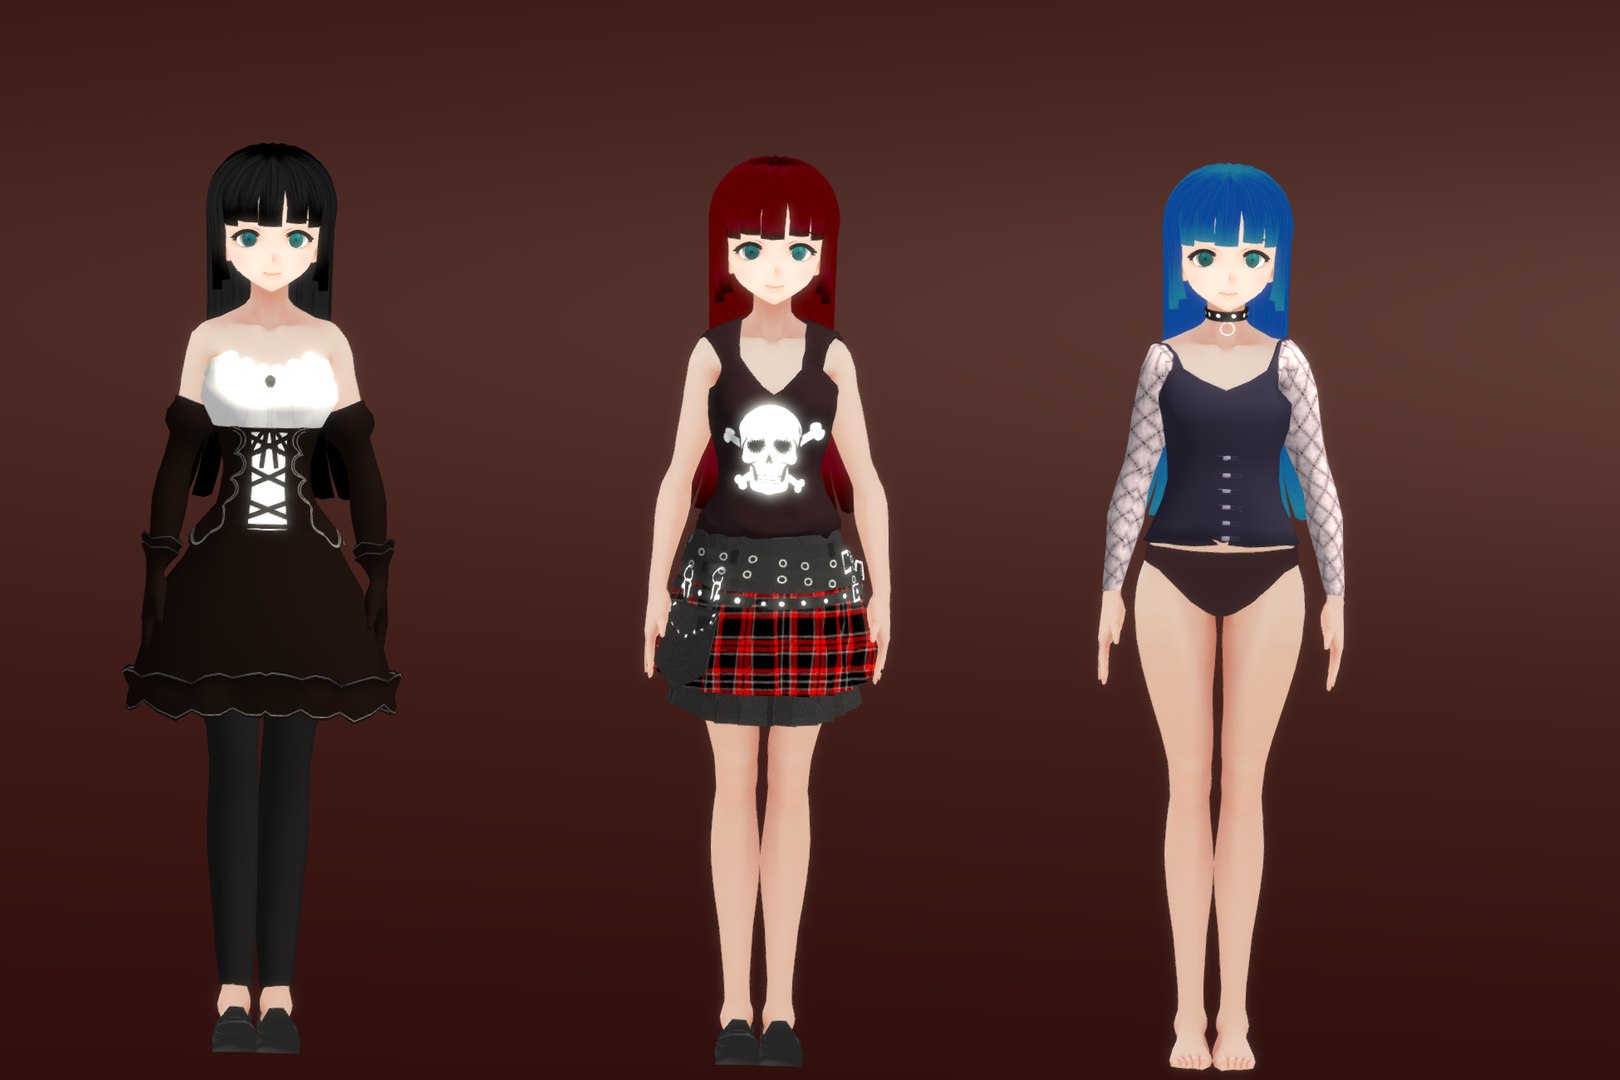 goth anime female characters